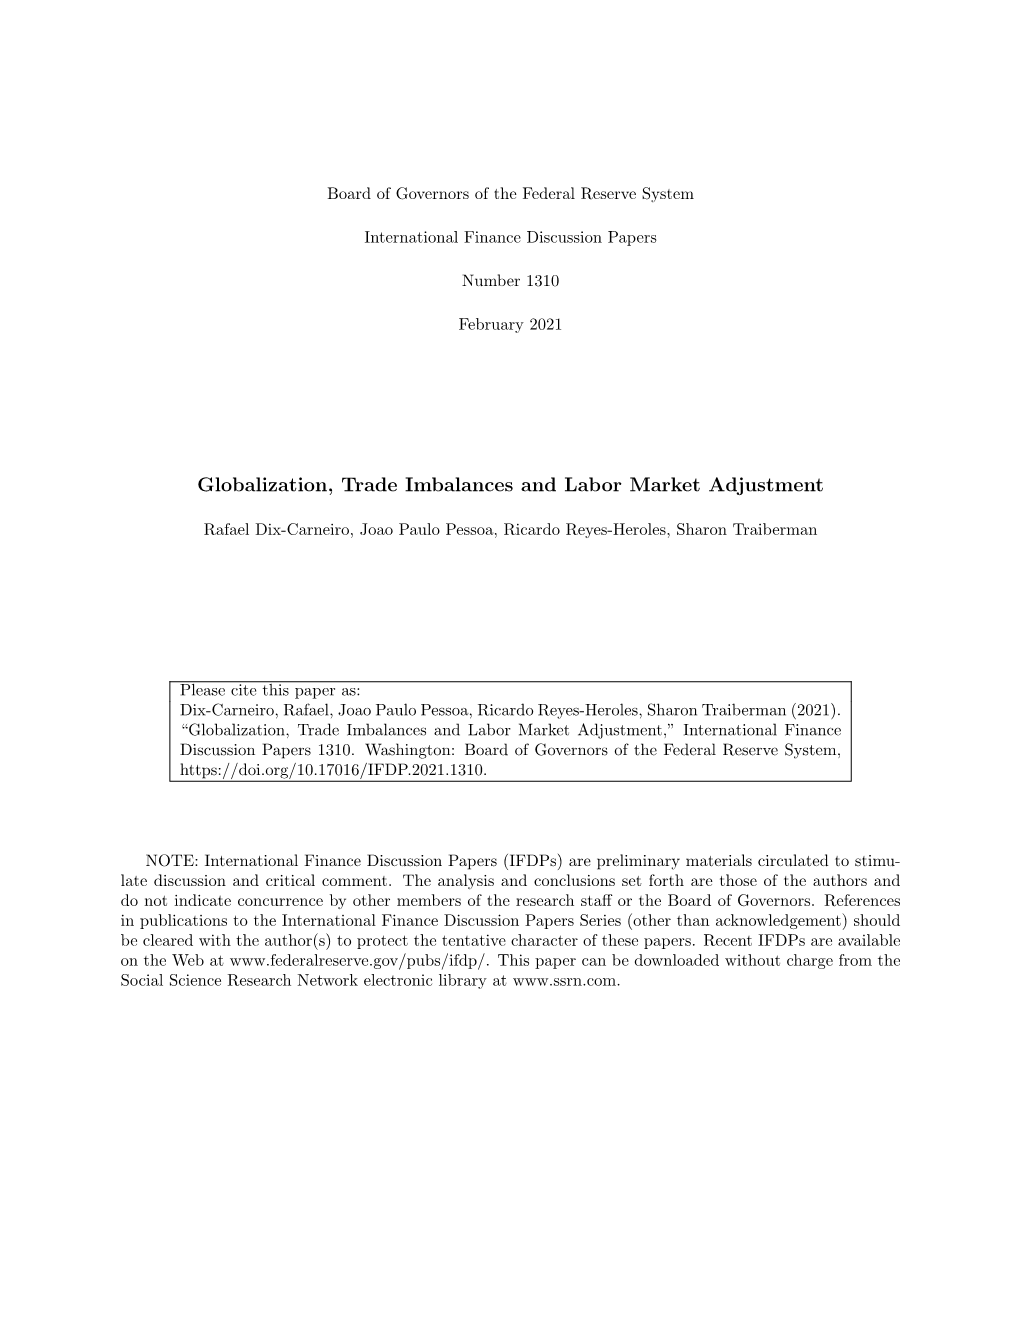 Globalization, Trade Imbalances and Labor Market Adjustment